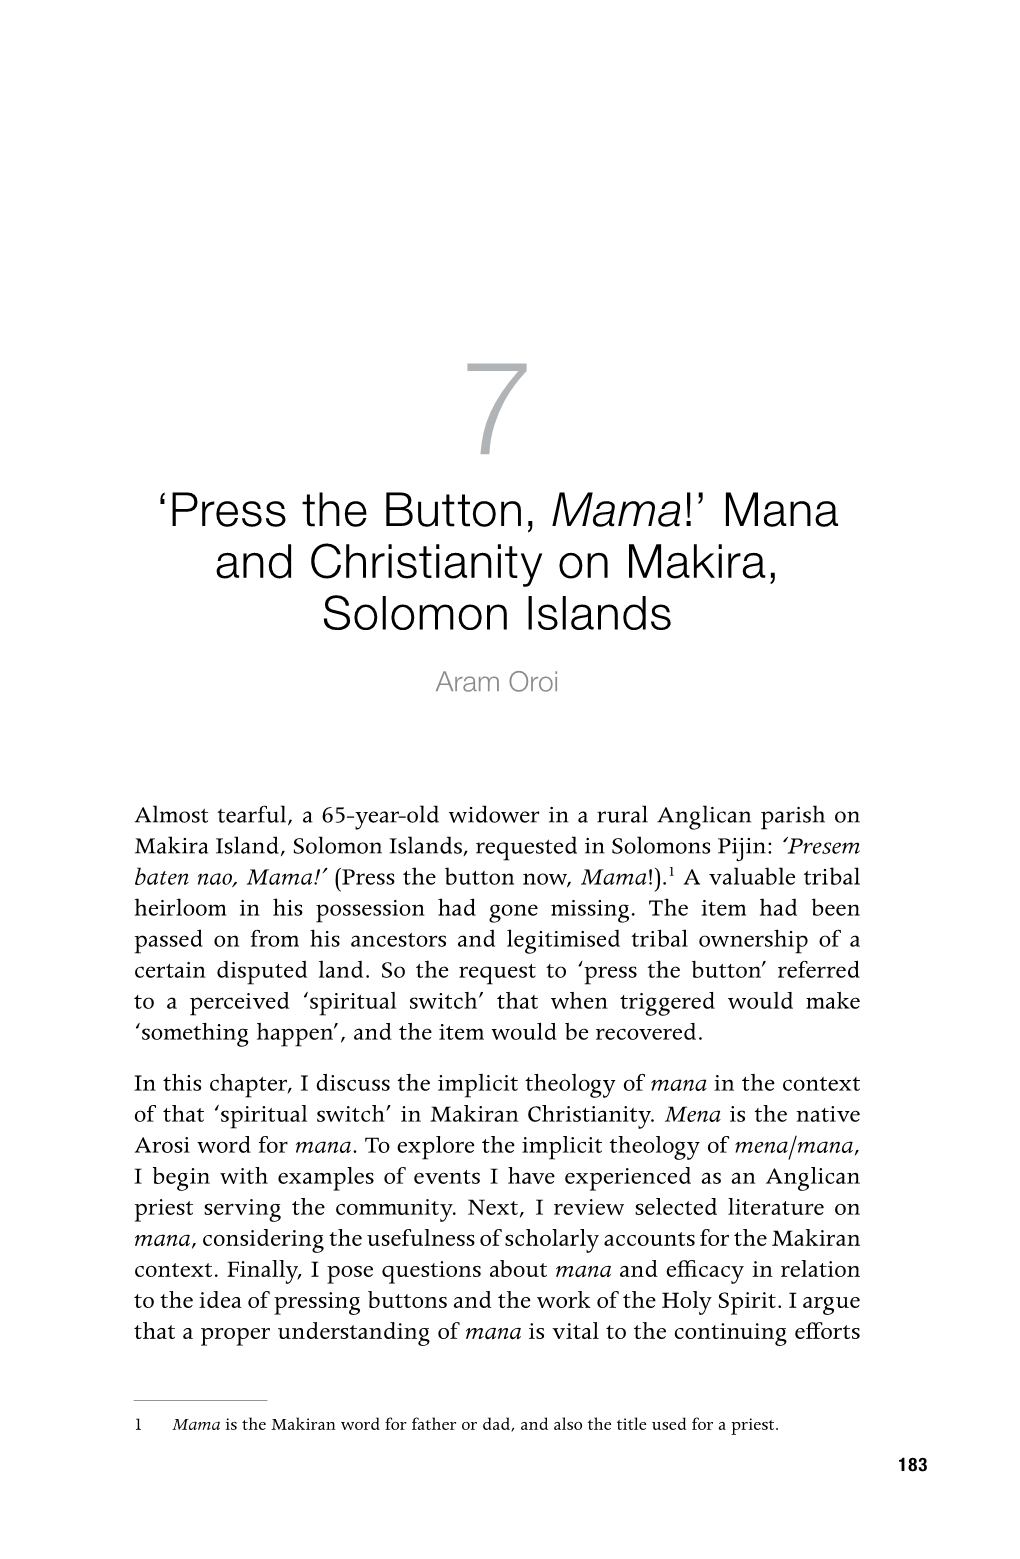 'Press the Button, Mama!' Mana and Christianity on Makira, Solomon Islands